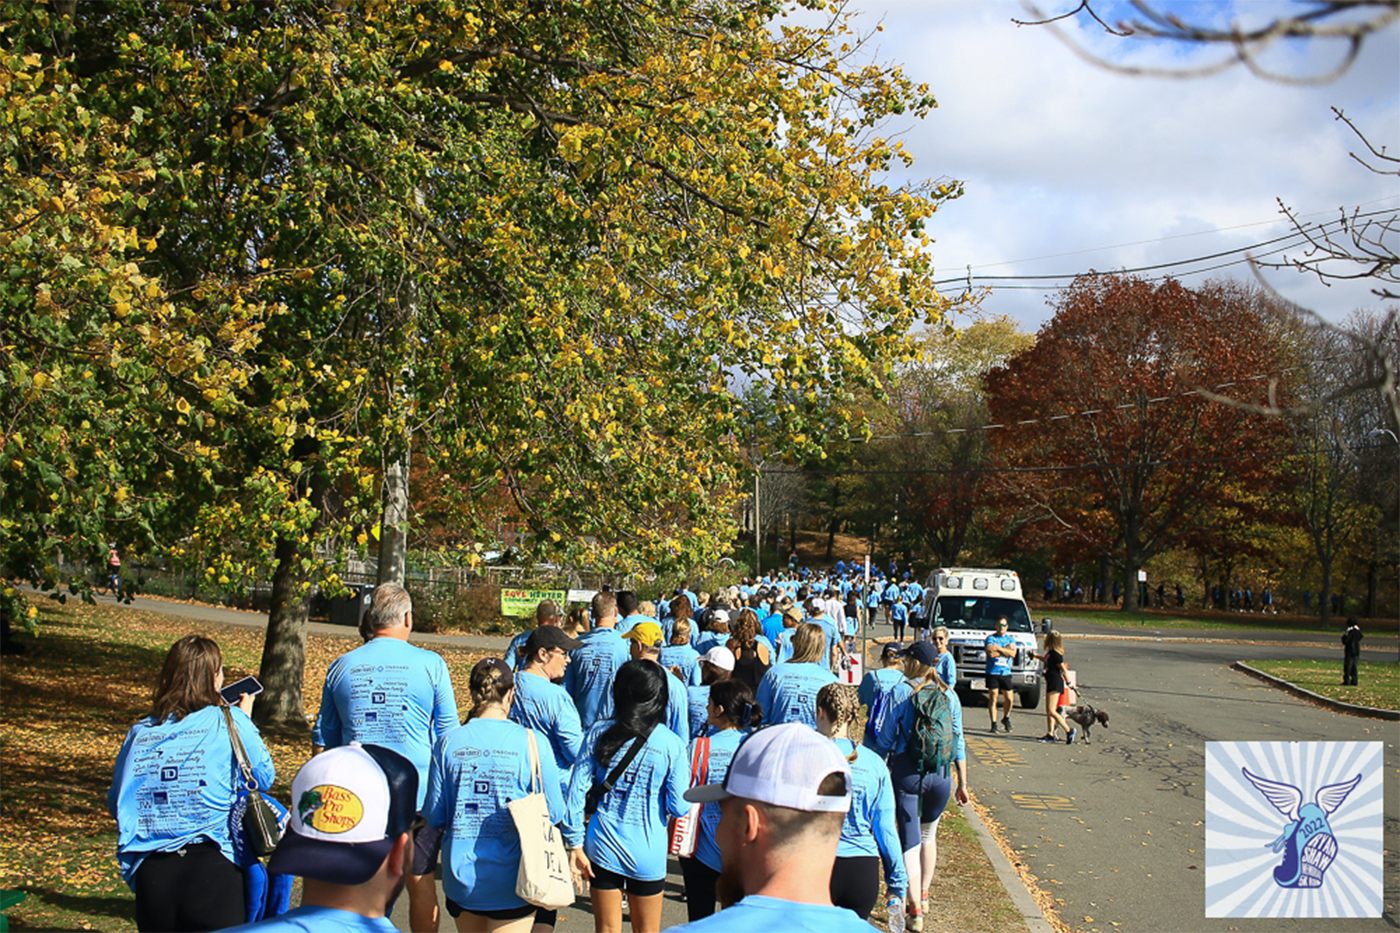 Runners wearing blue shirts at the Ryan Shaw Memorial 5K.